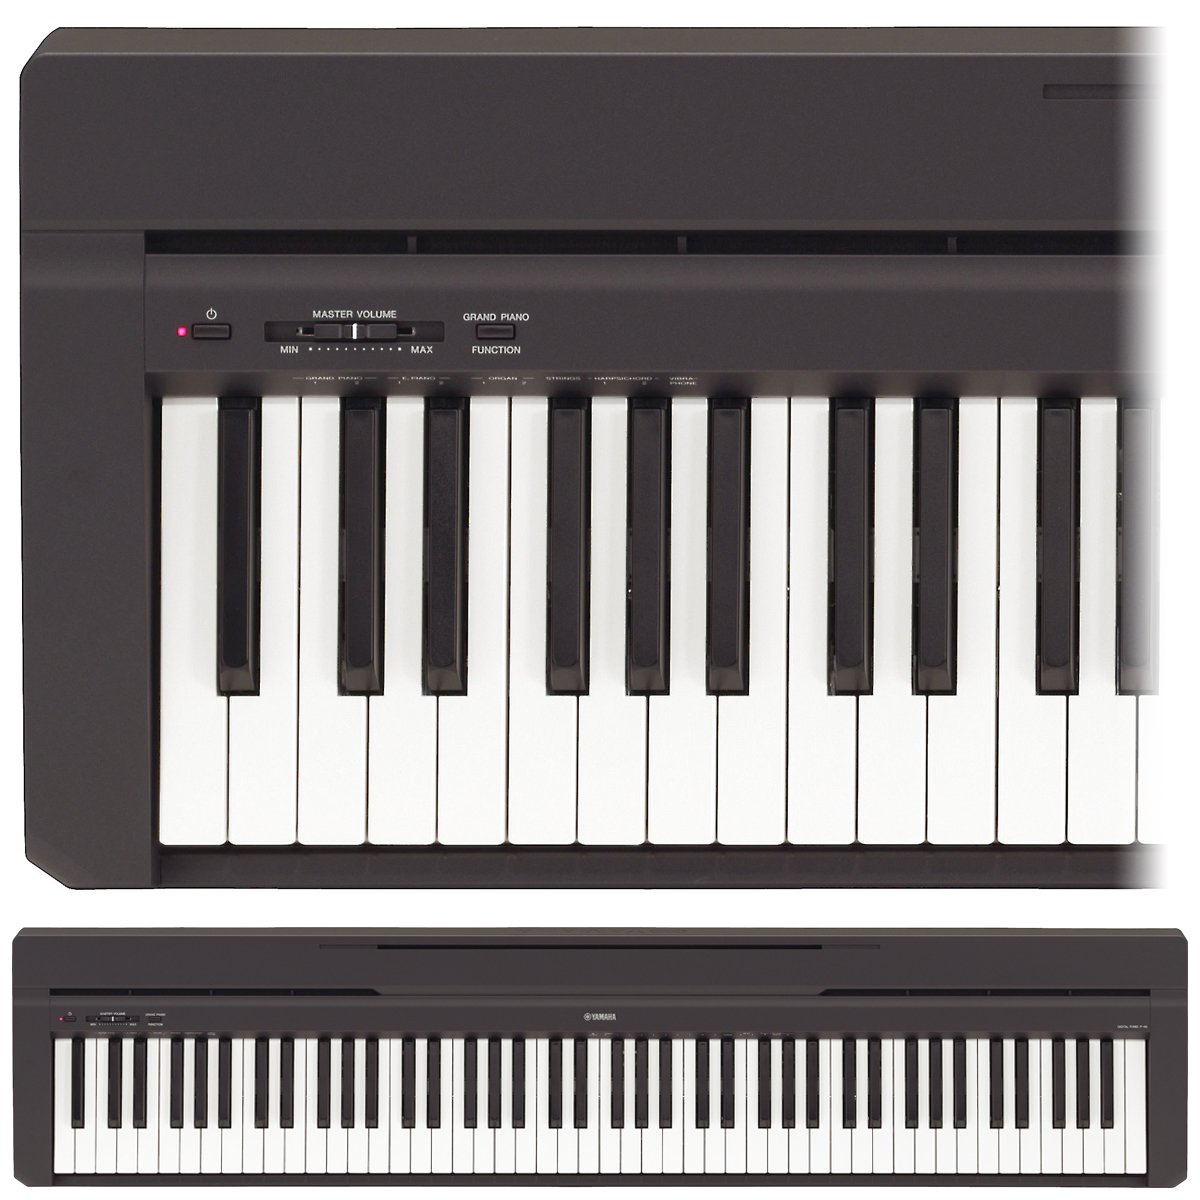 Yamaha P45 Digital Piano Review - Best Piano Keyboards